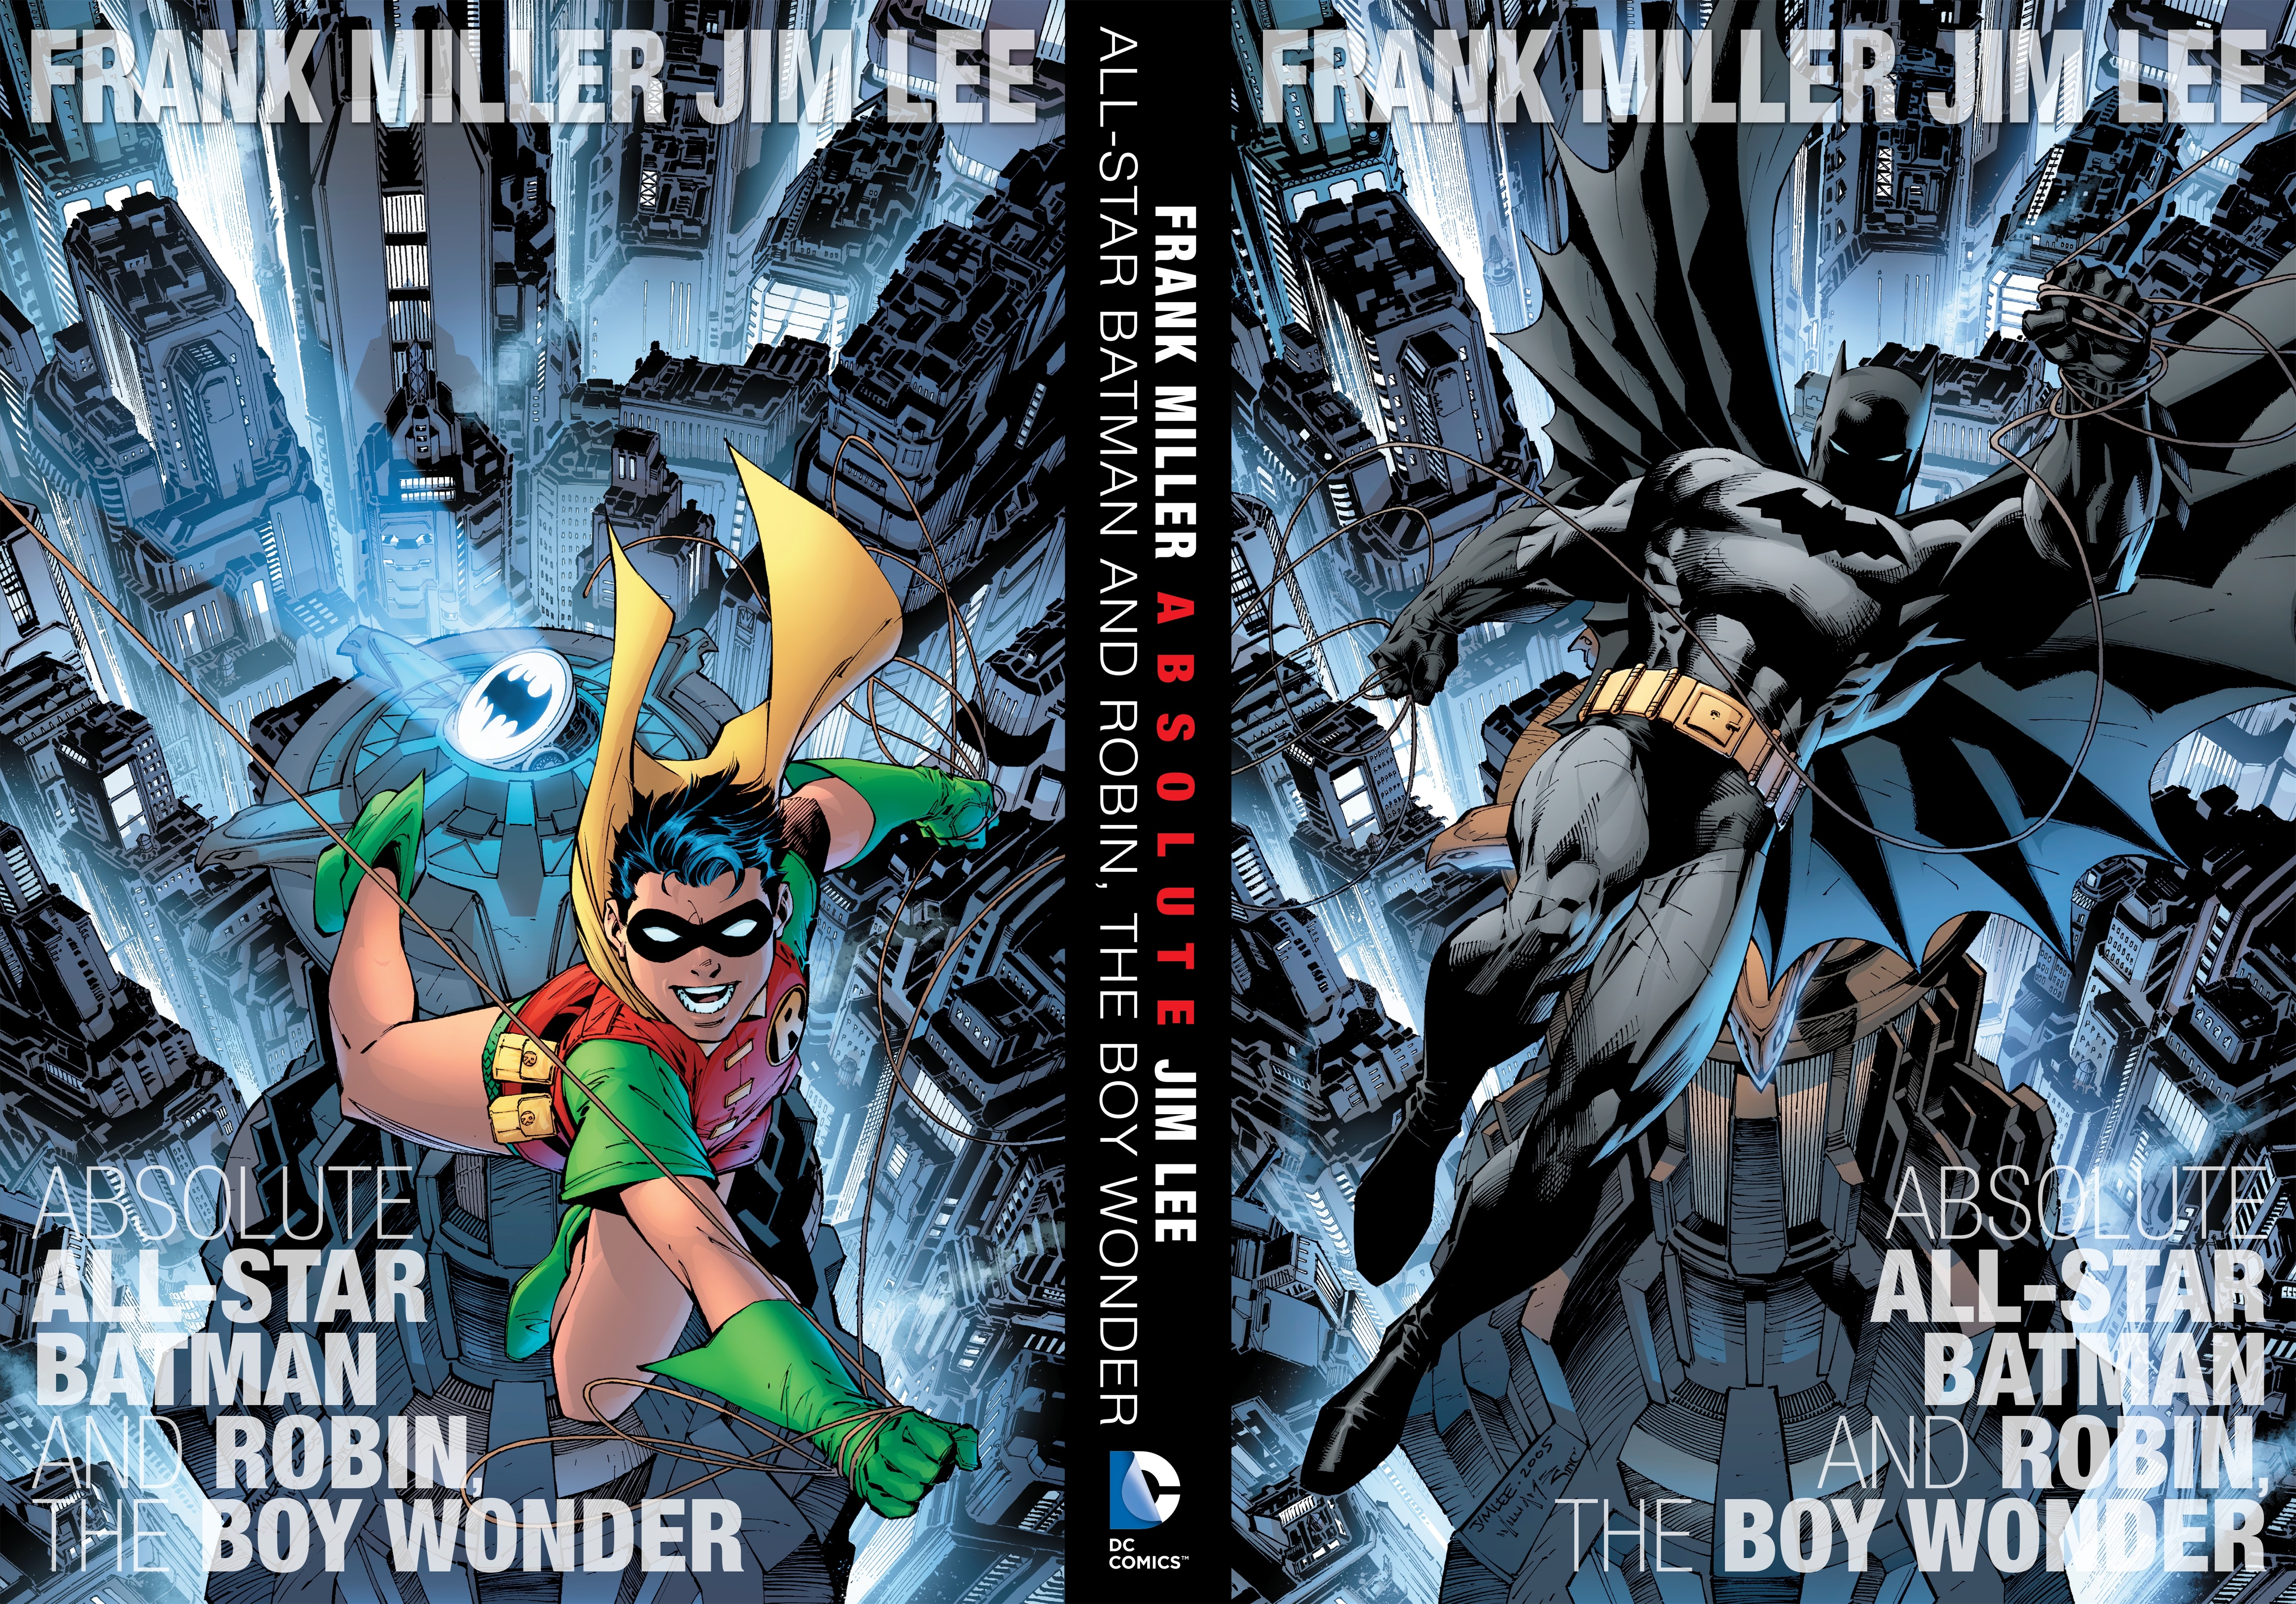 Absolute All-Star Batman And Robin, The Boy Wonder by FRANK MILLER -  Penguin Books Australia